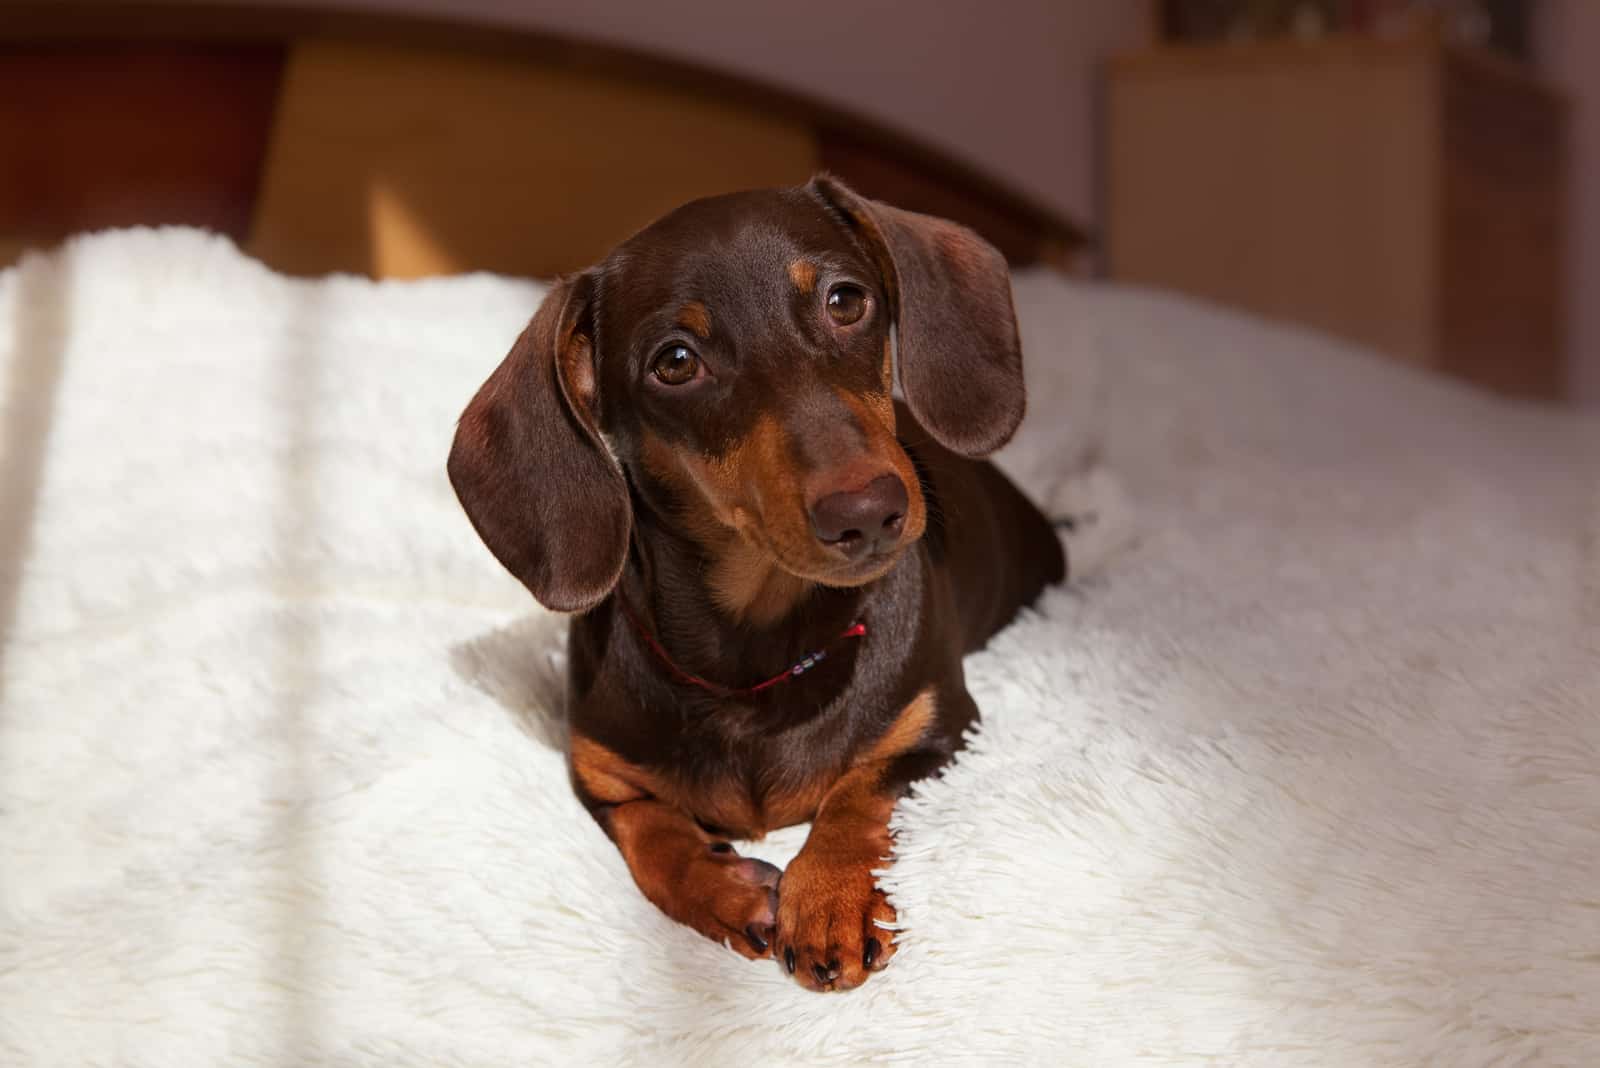 dachshund lies on a light blanket